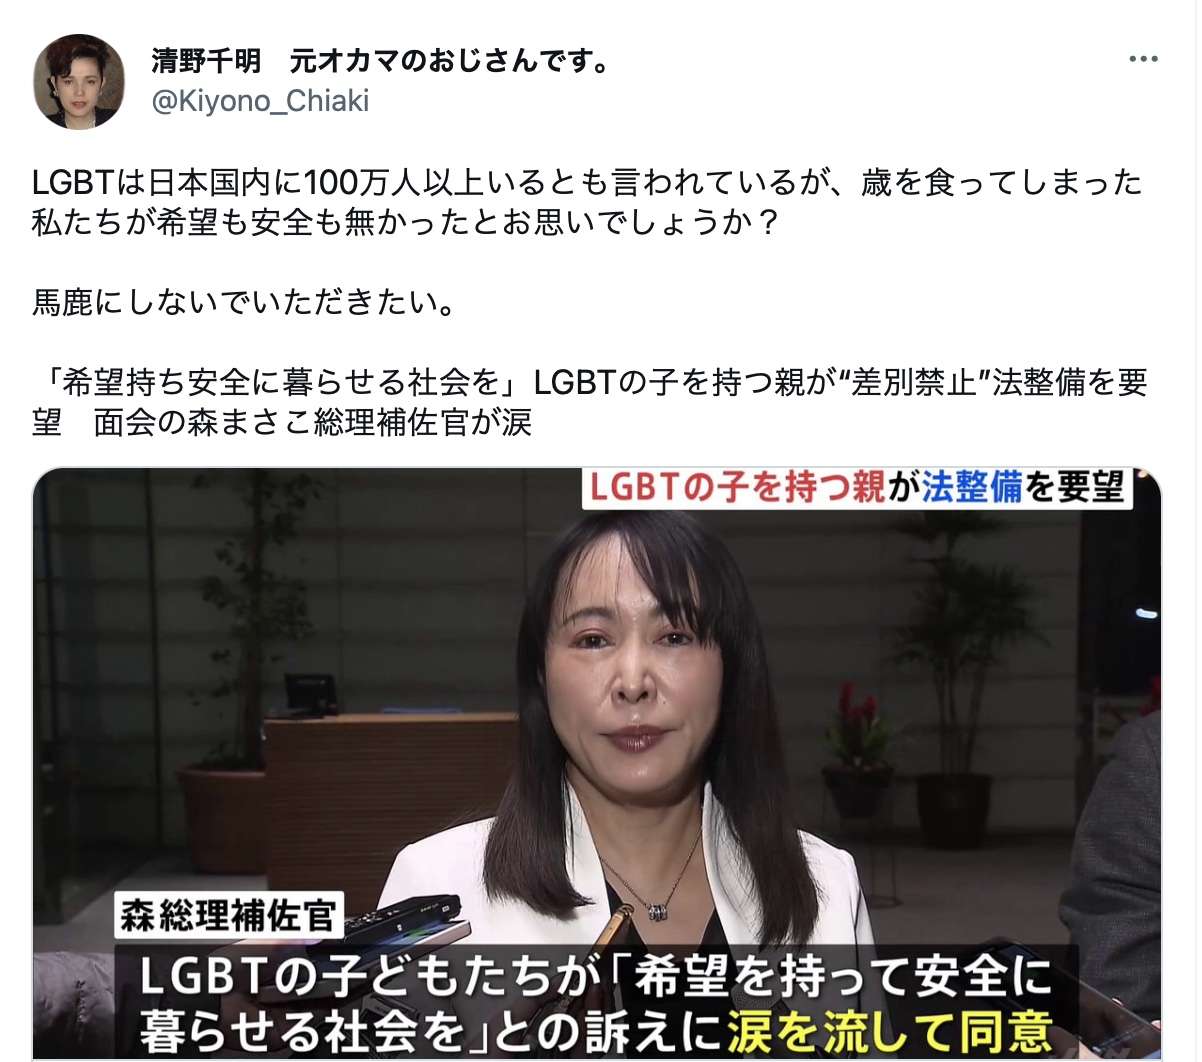 LGBTの子を持つ親が差別禁止法整備を要望「希望持ち安全に暮らせる社会を」森まさこ総理補佐官